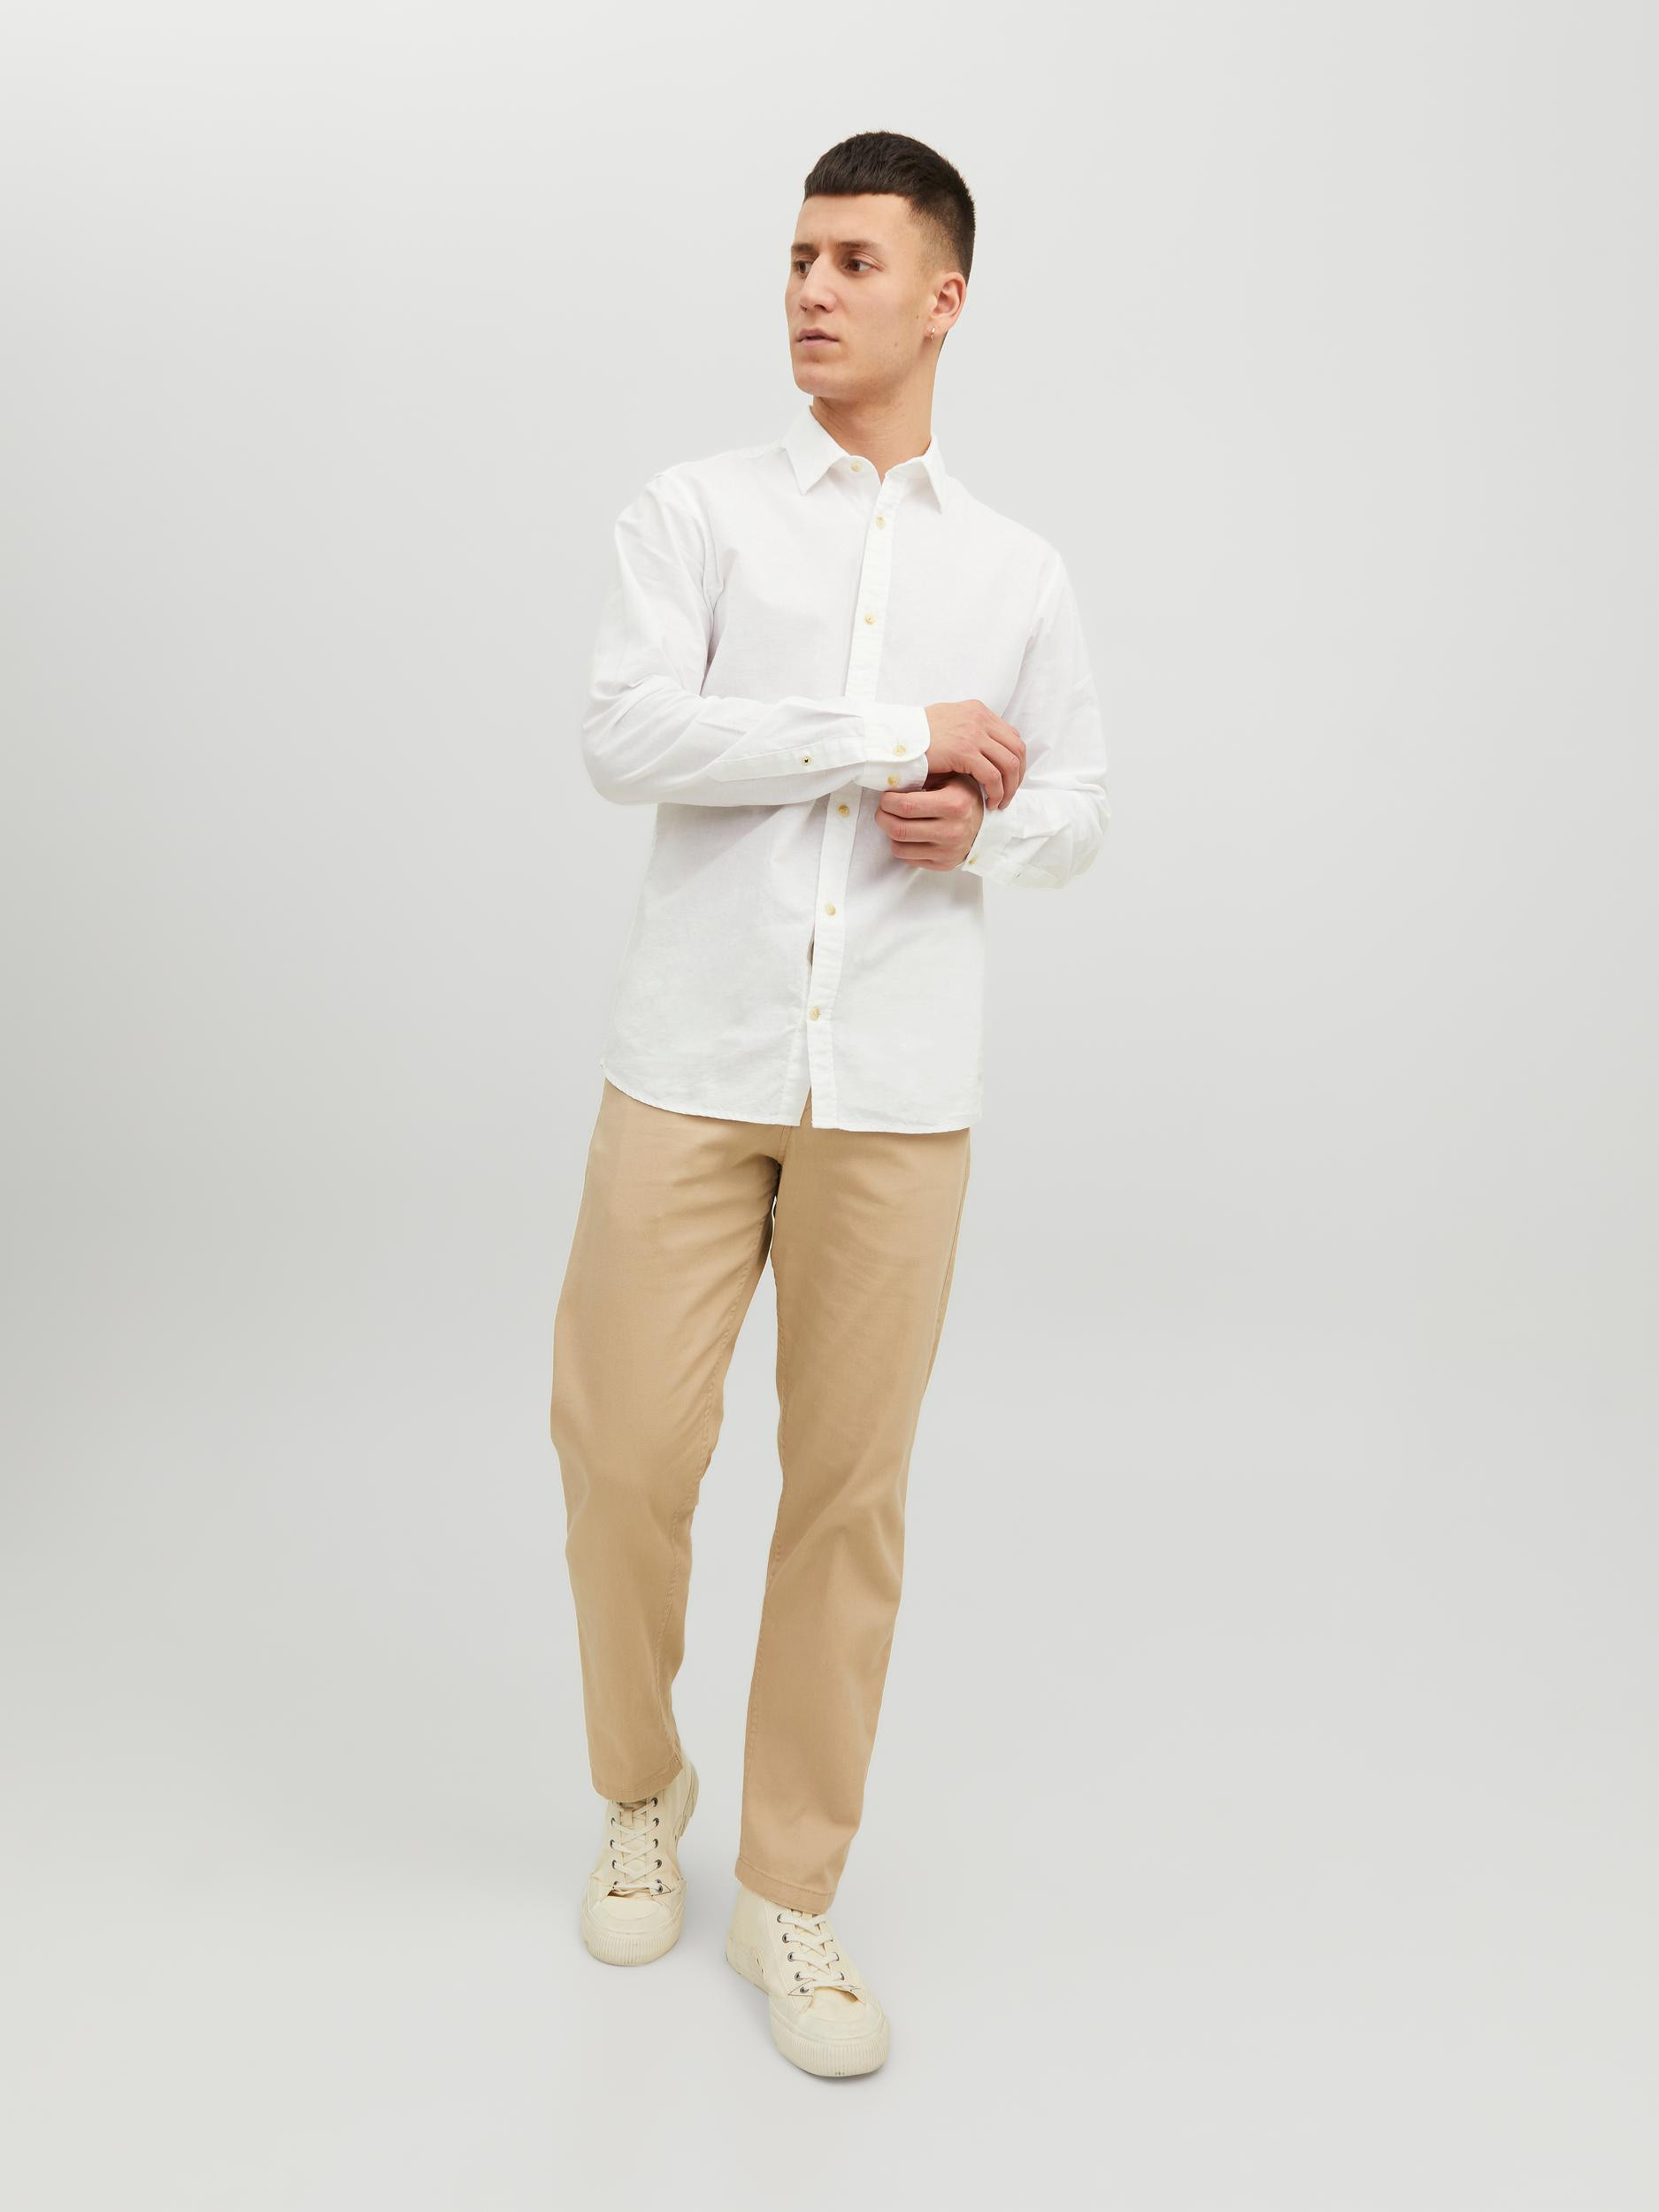 Jack & Jones - Slim fit shirt, White, large image number 1